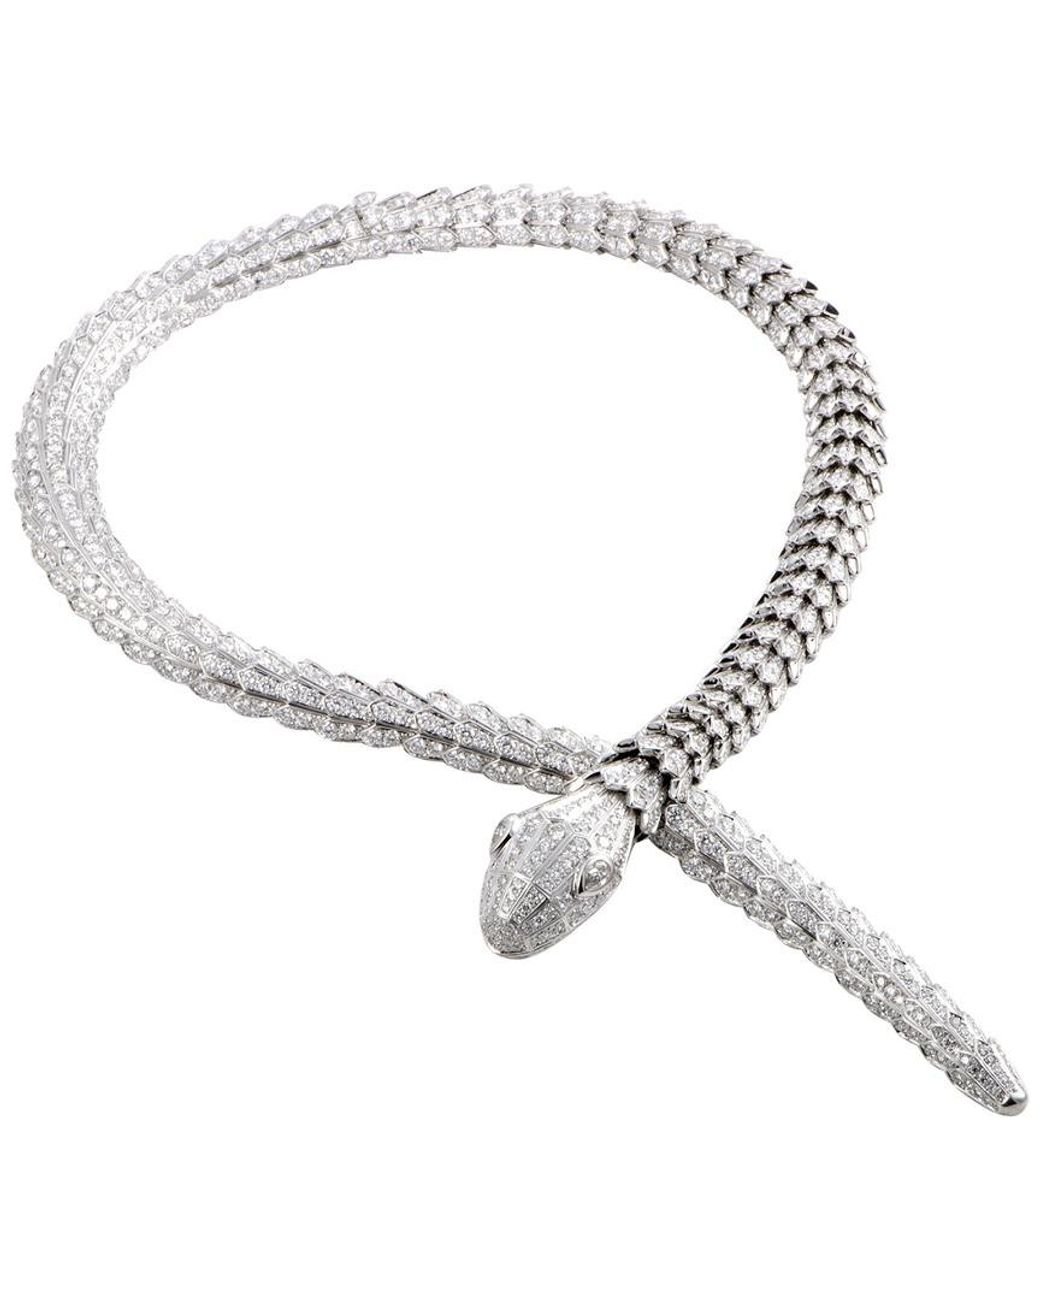 BVLGARI Bulgari Serpenti 18k Necklace in Metallic | Lyst